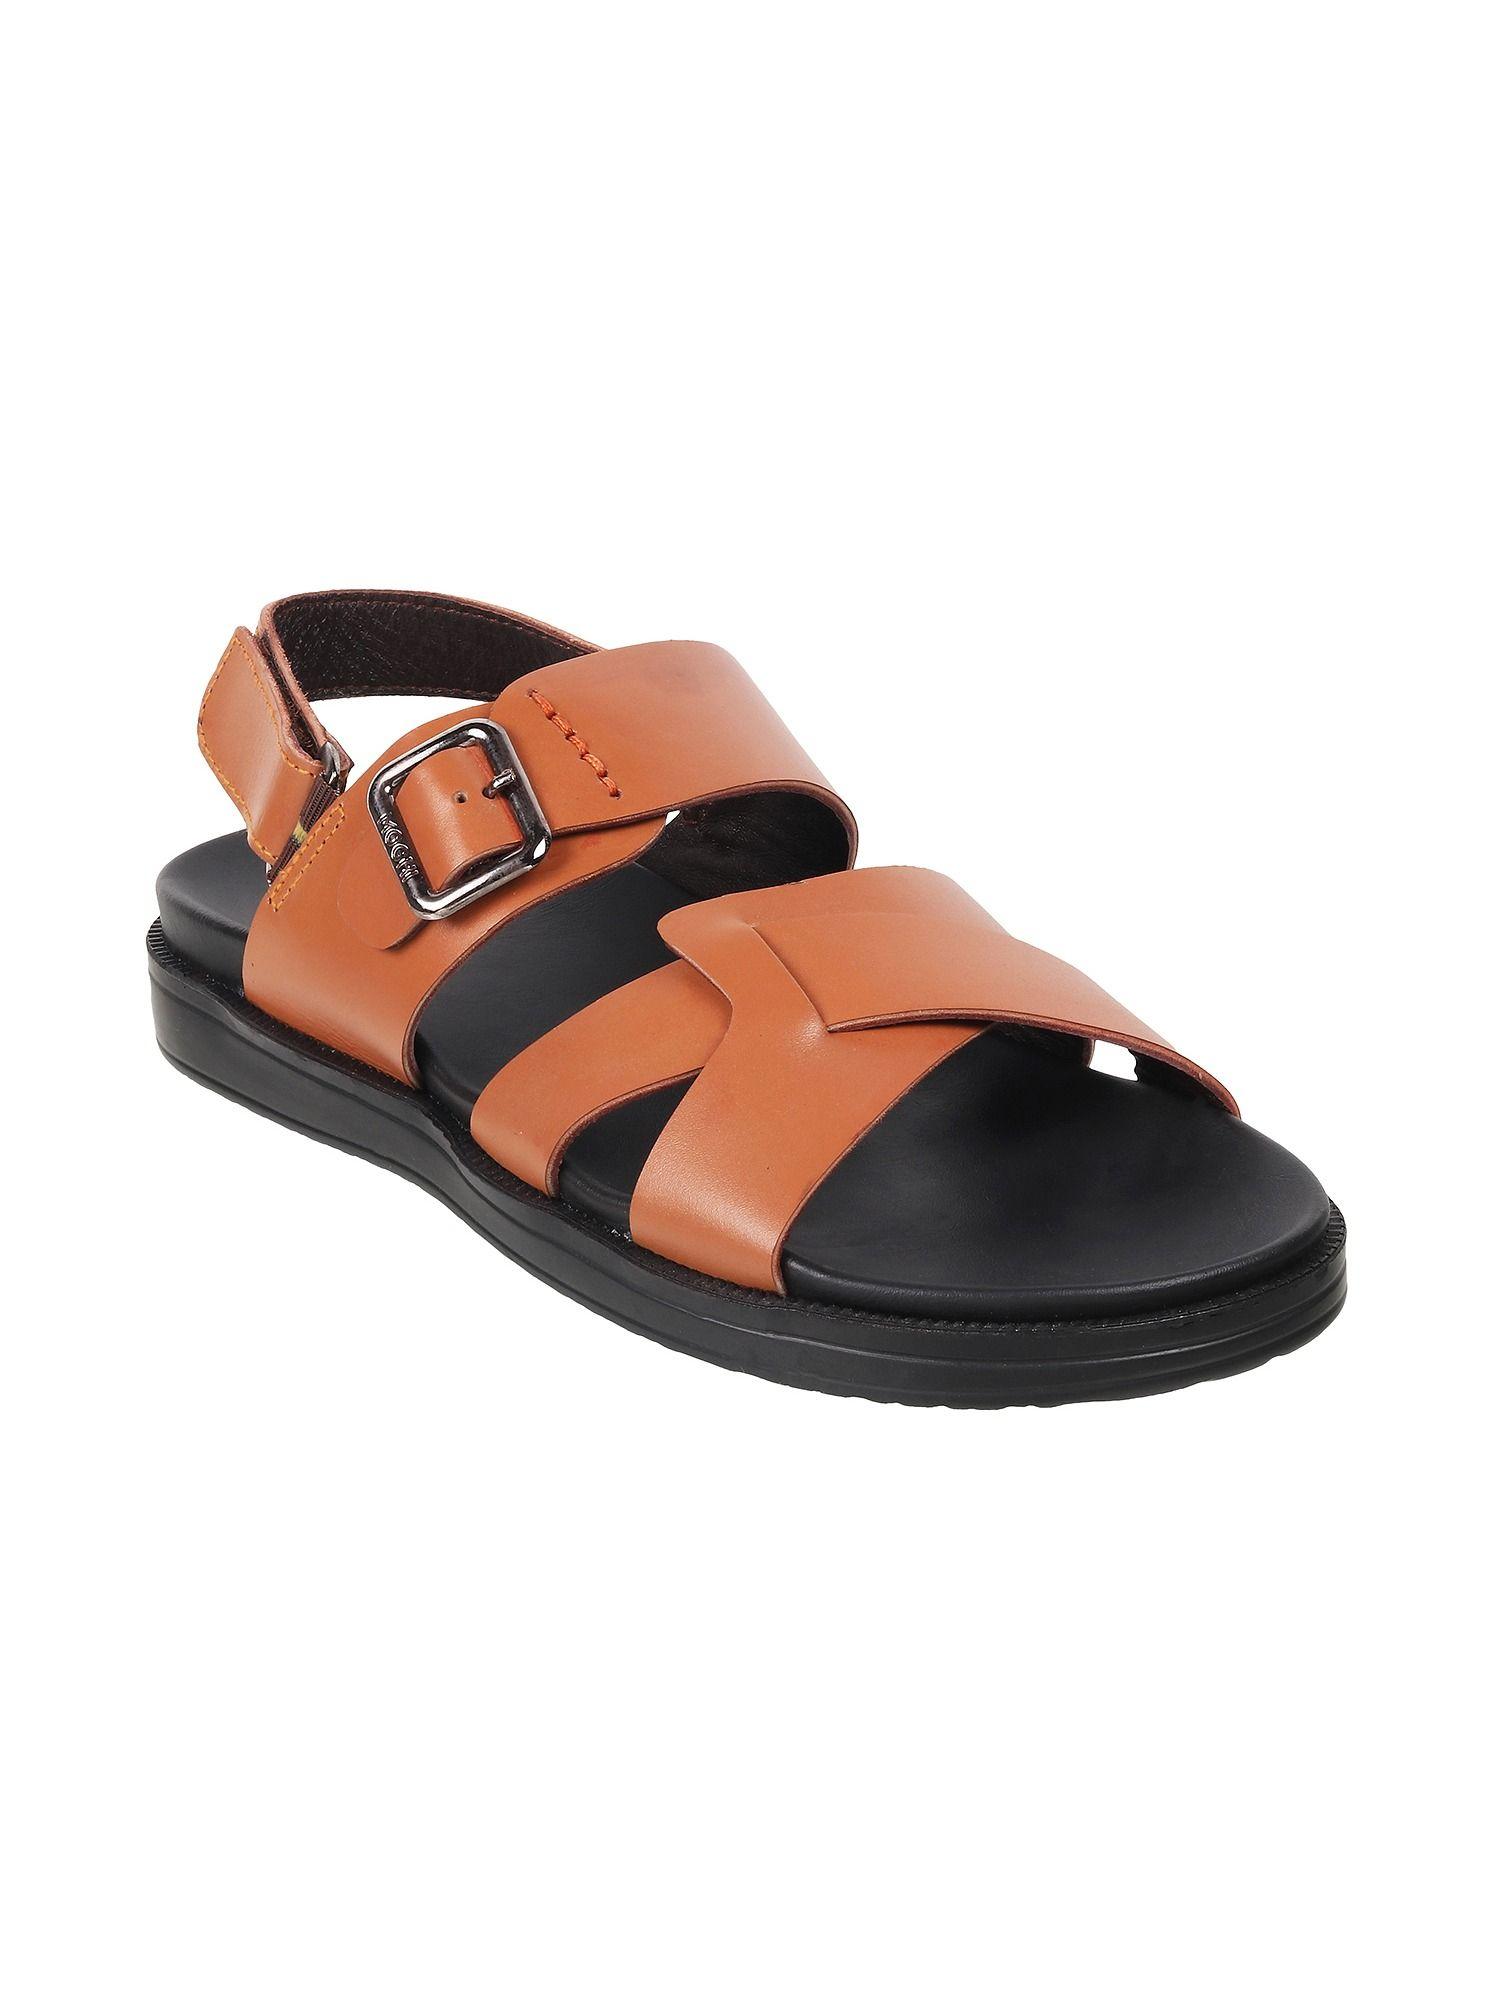 solid/plain tan sandals